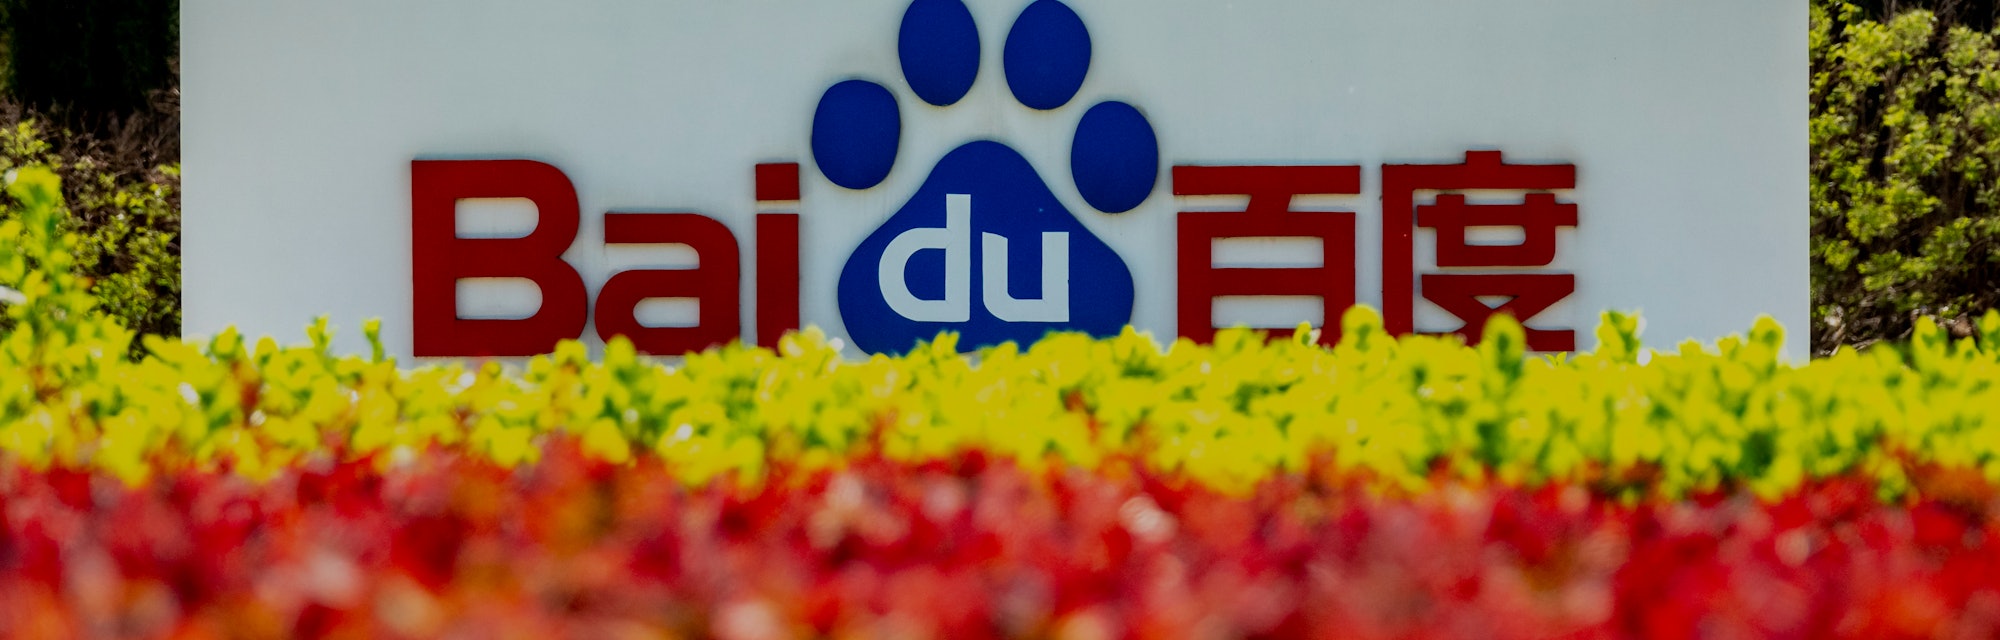 Baidu sign outside its Beijing headquarters.